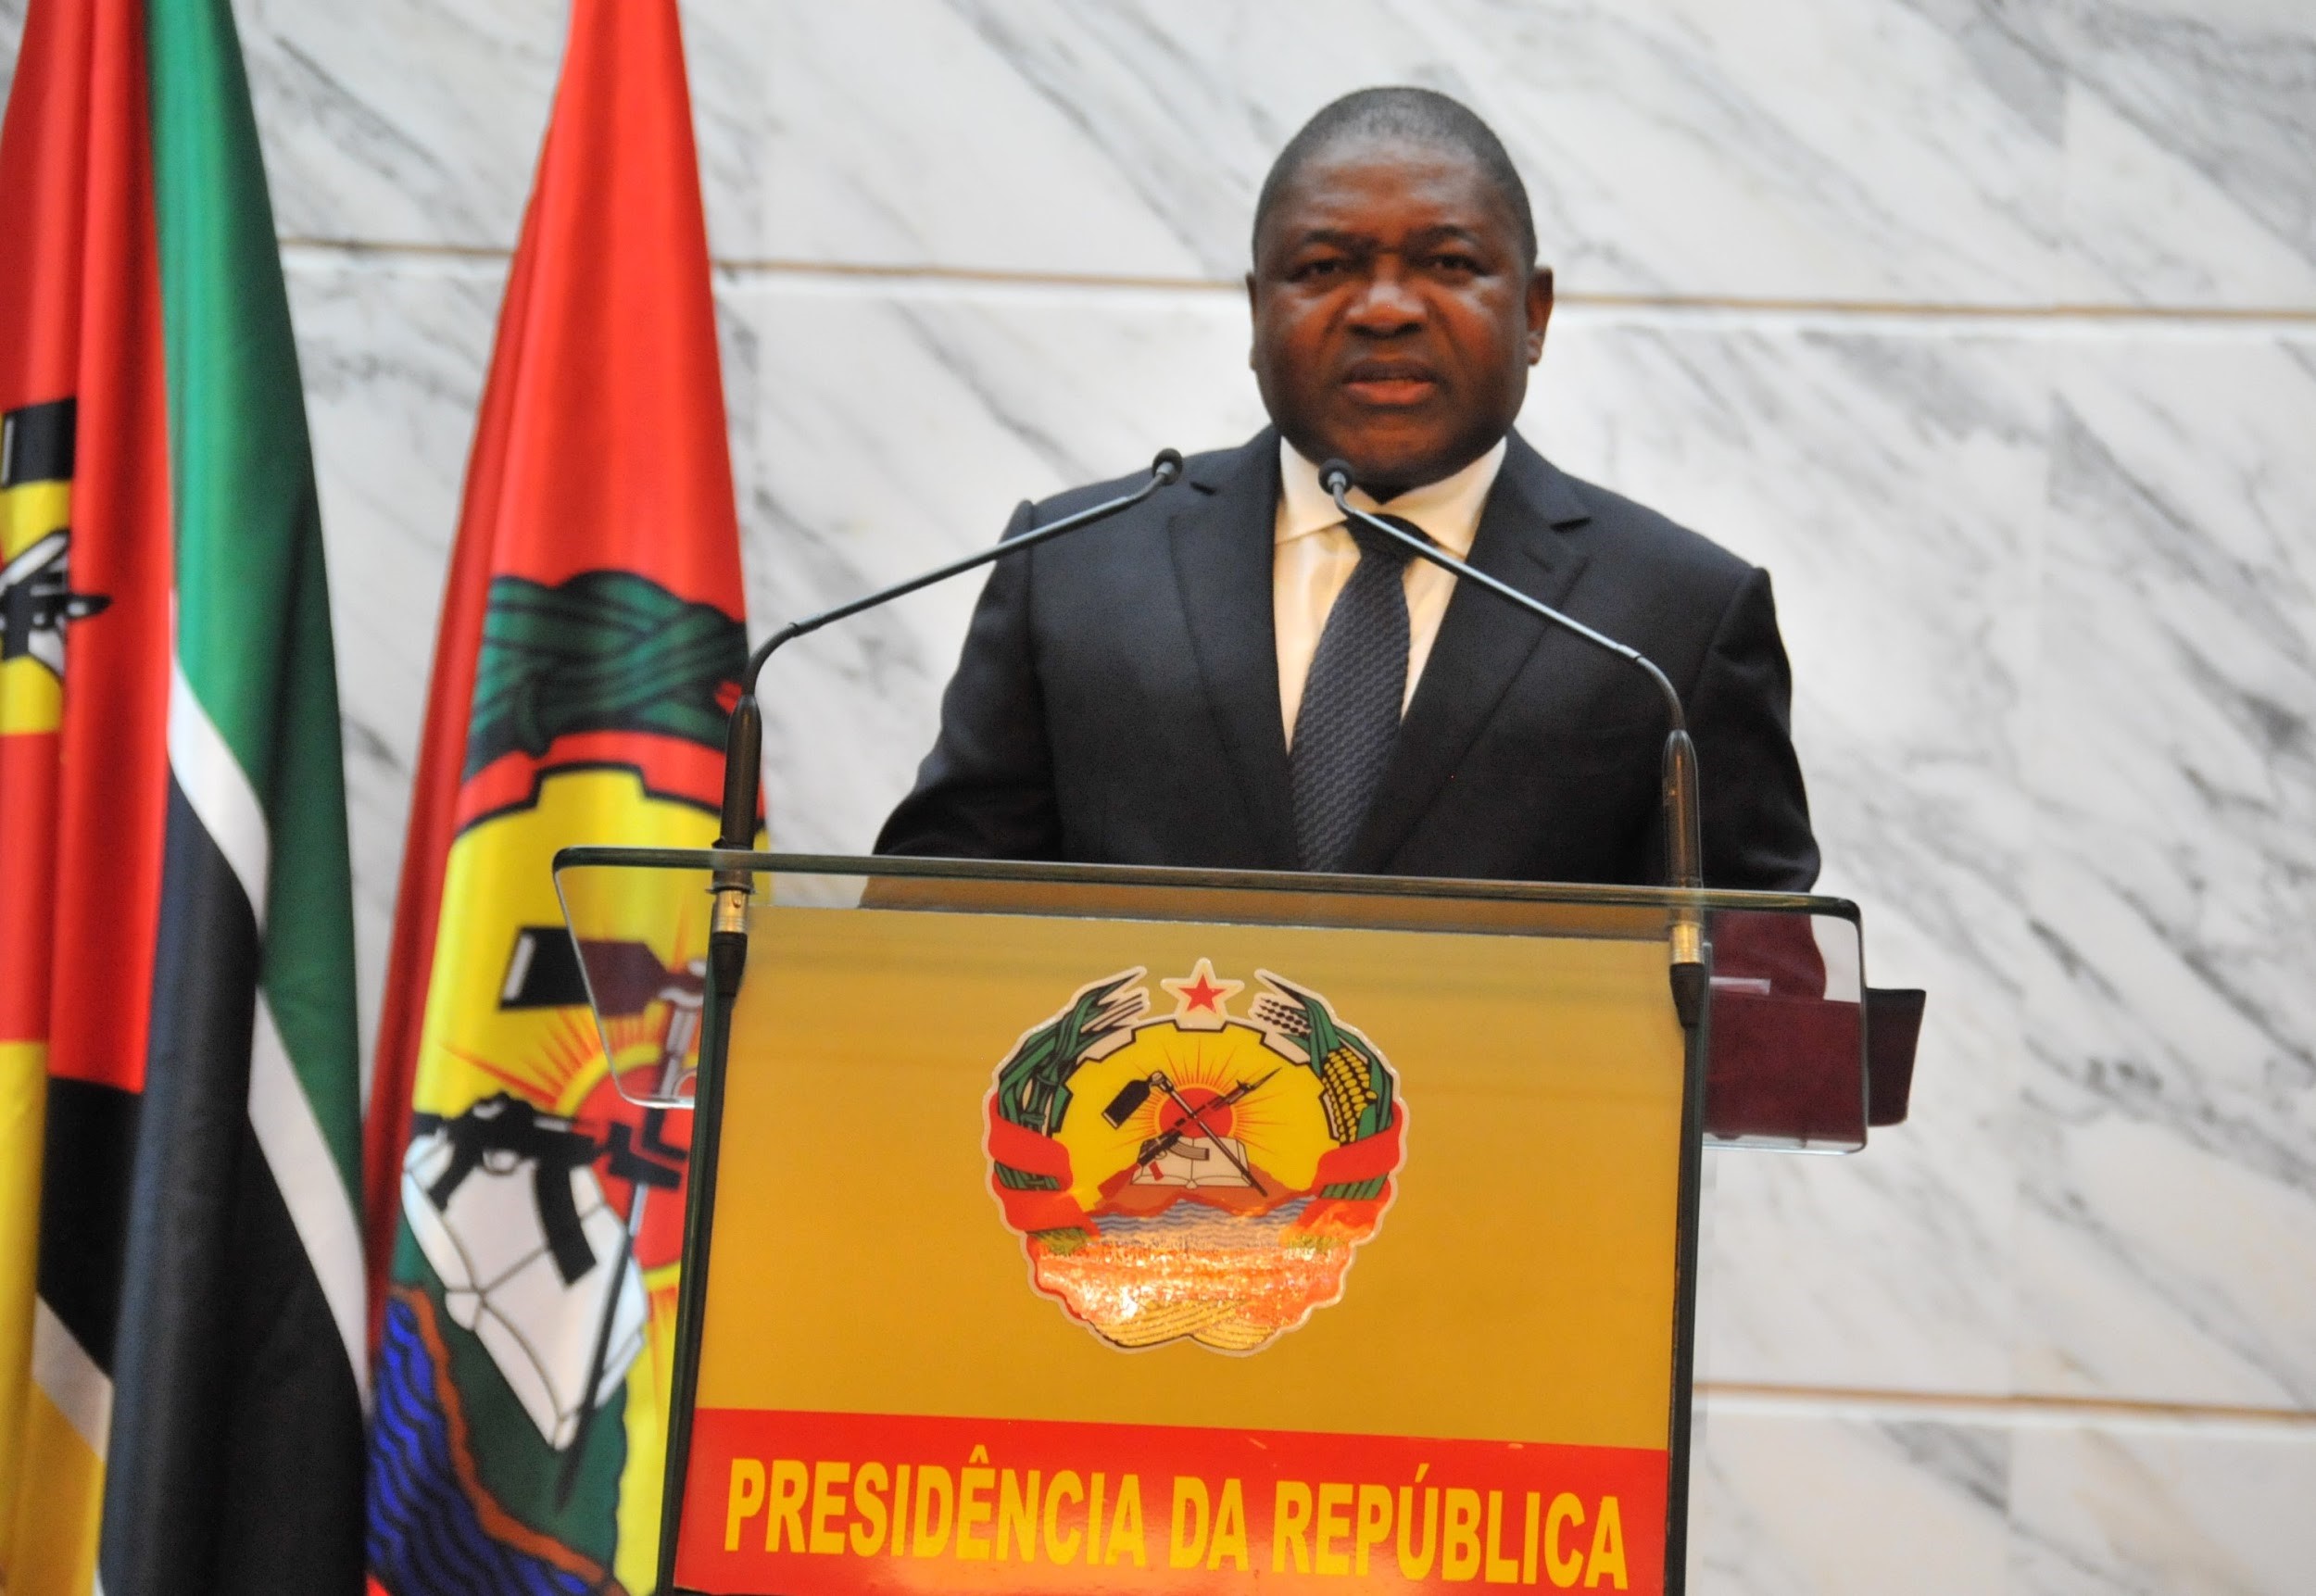 Mozambican President Filipe Nyusi